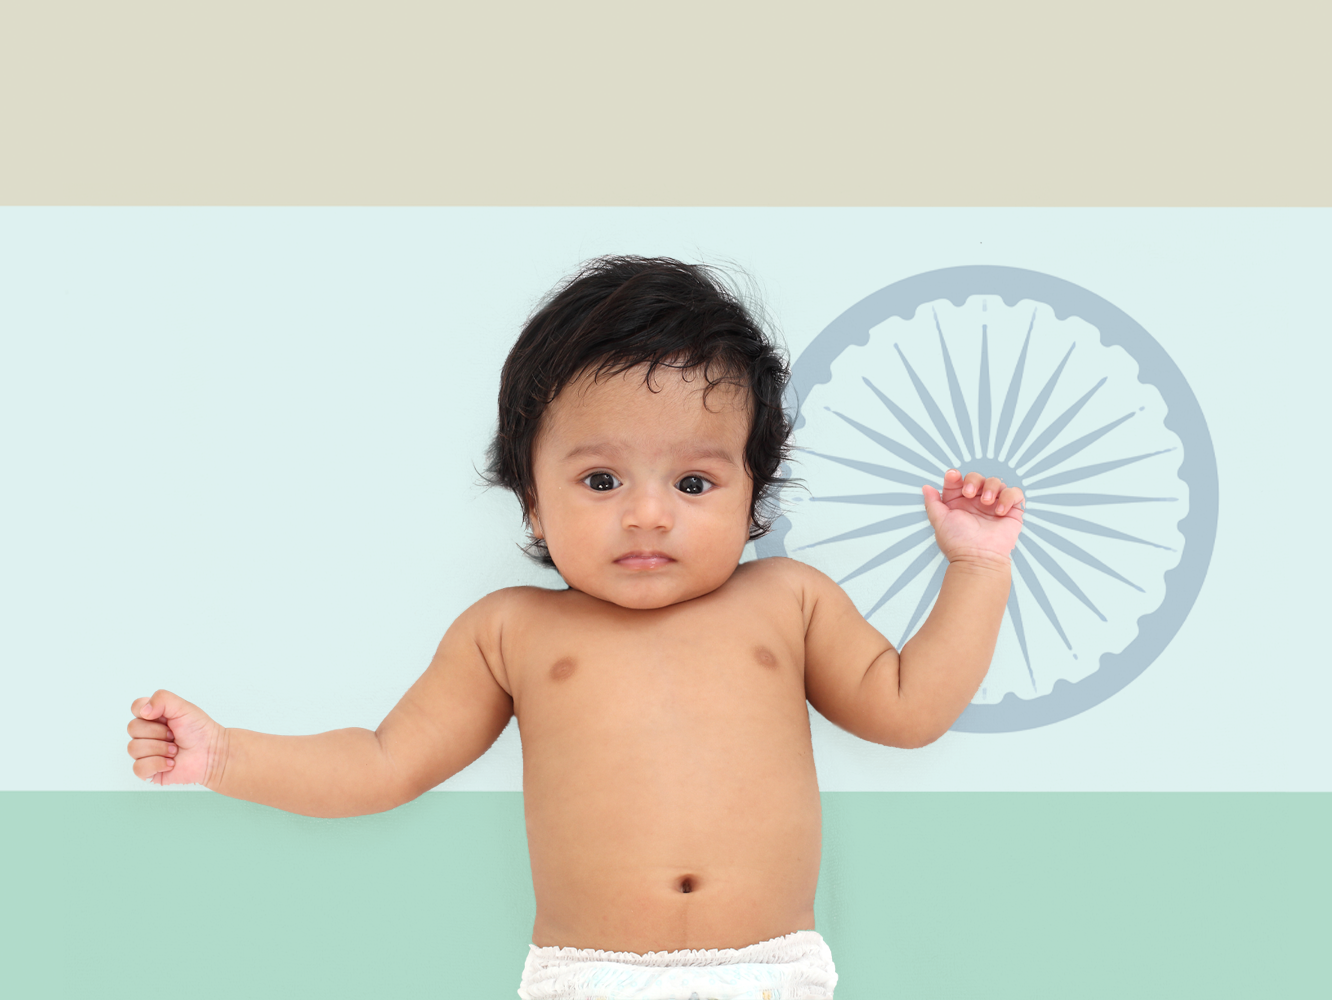 indian baby boy names